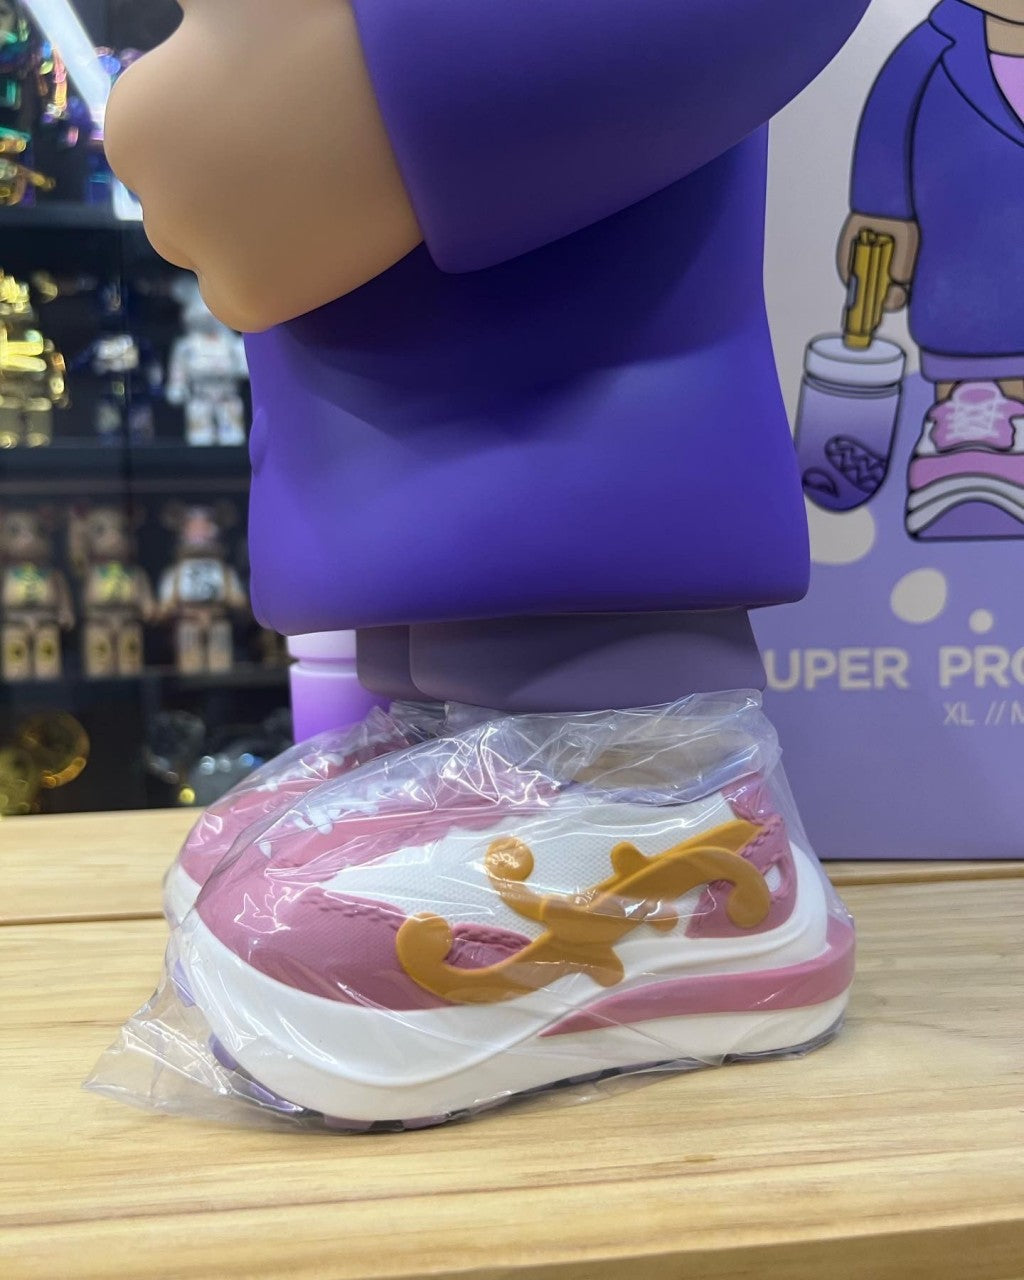 Super Professional XL // Milkshak (Purple) By Fools Paradise